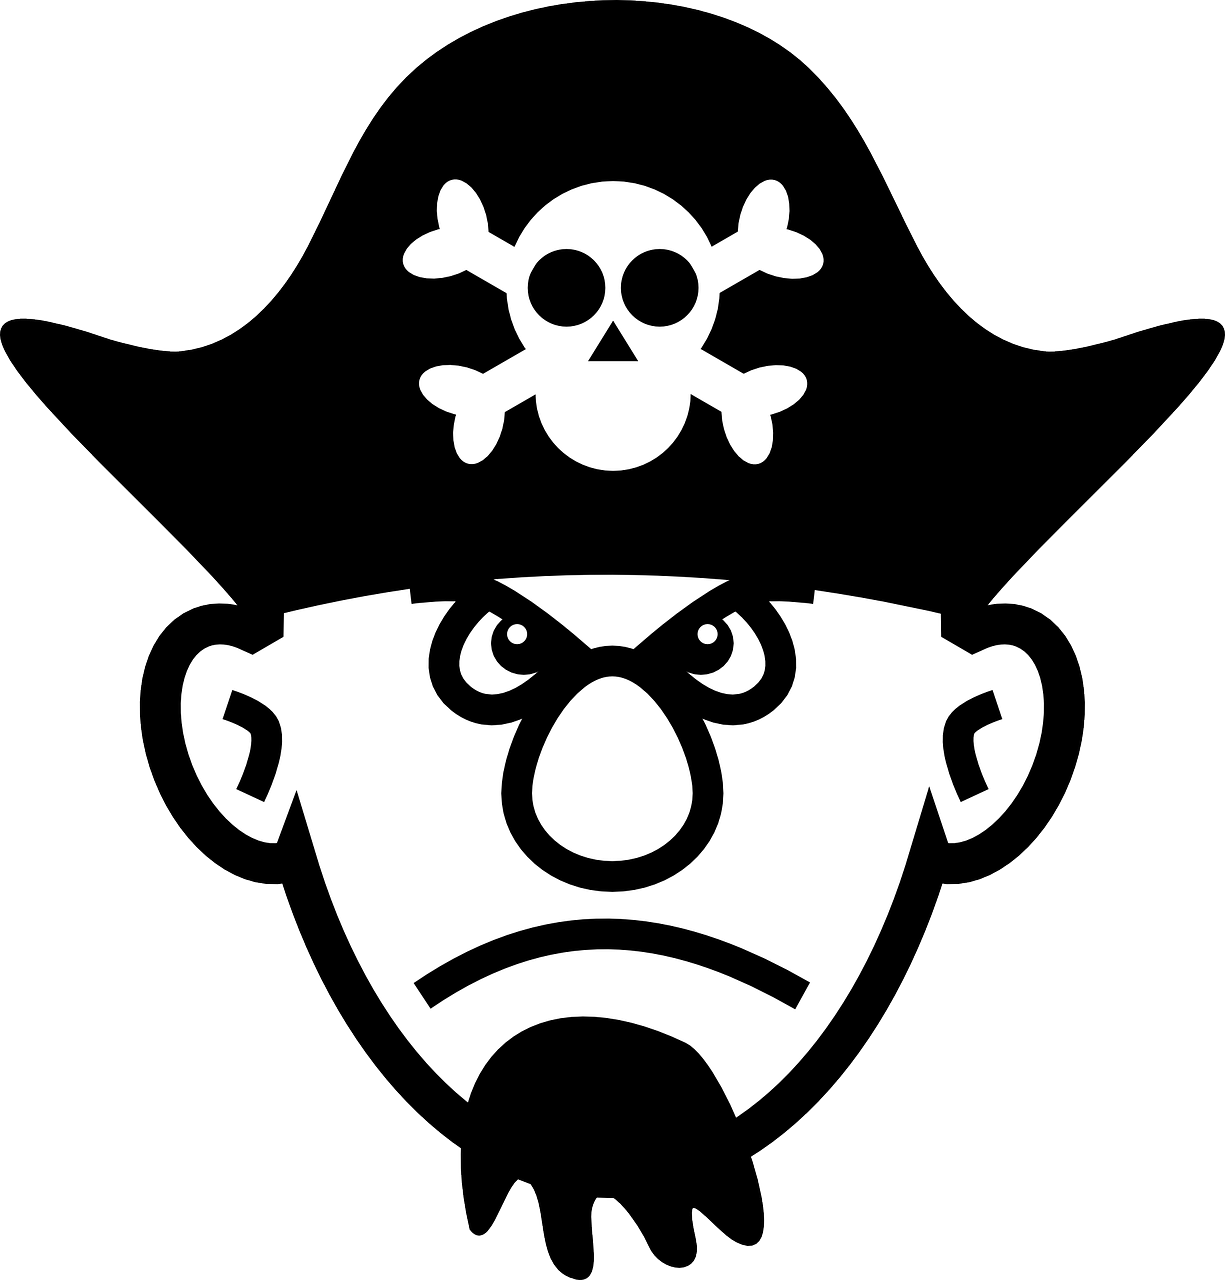 pirate skull and crossbones black free photo